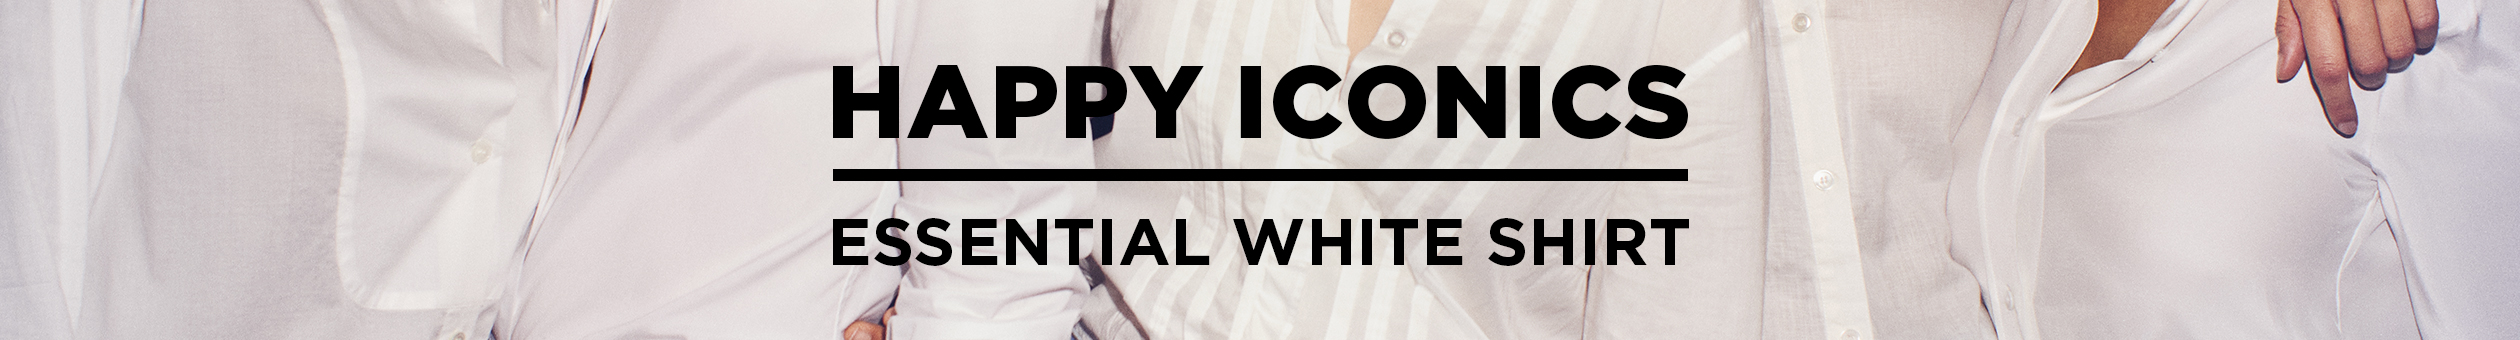 Happy iconics - The white shirt